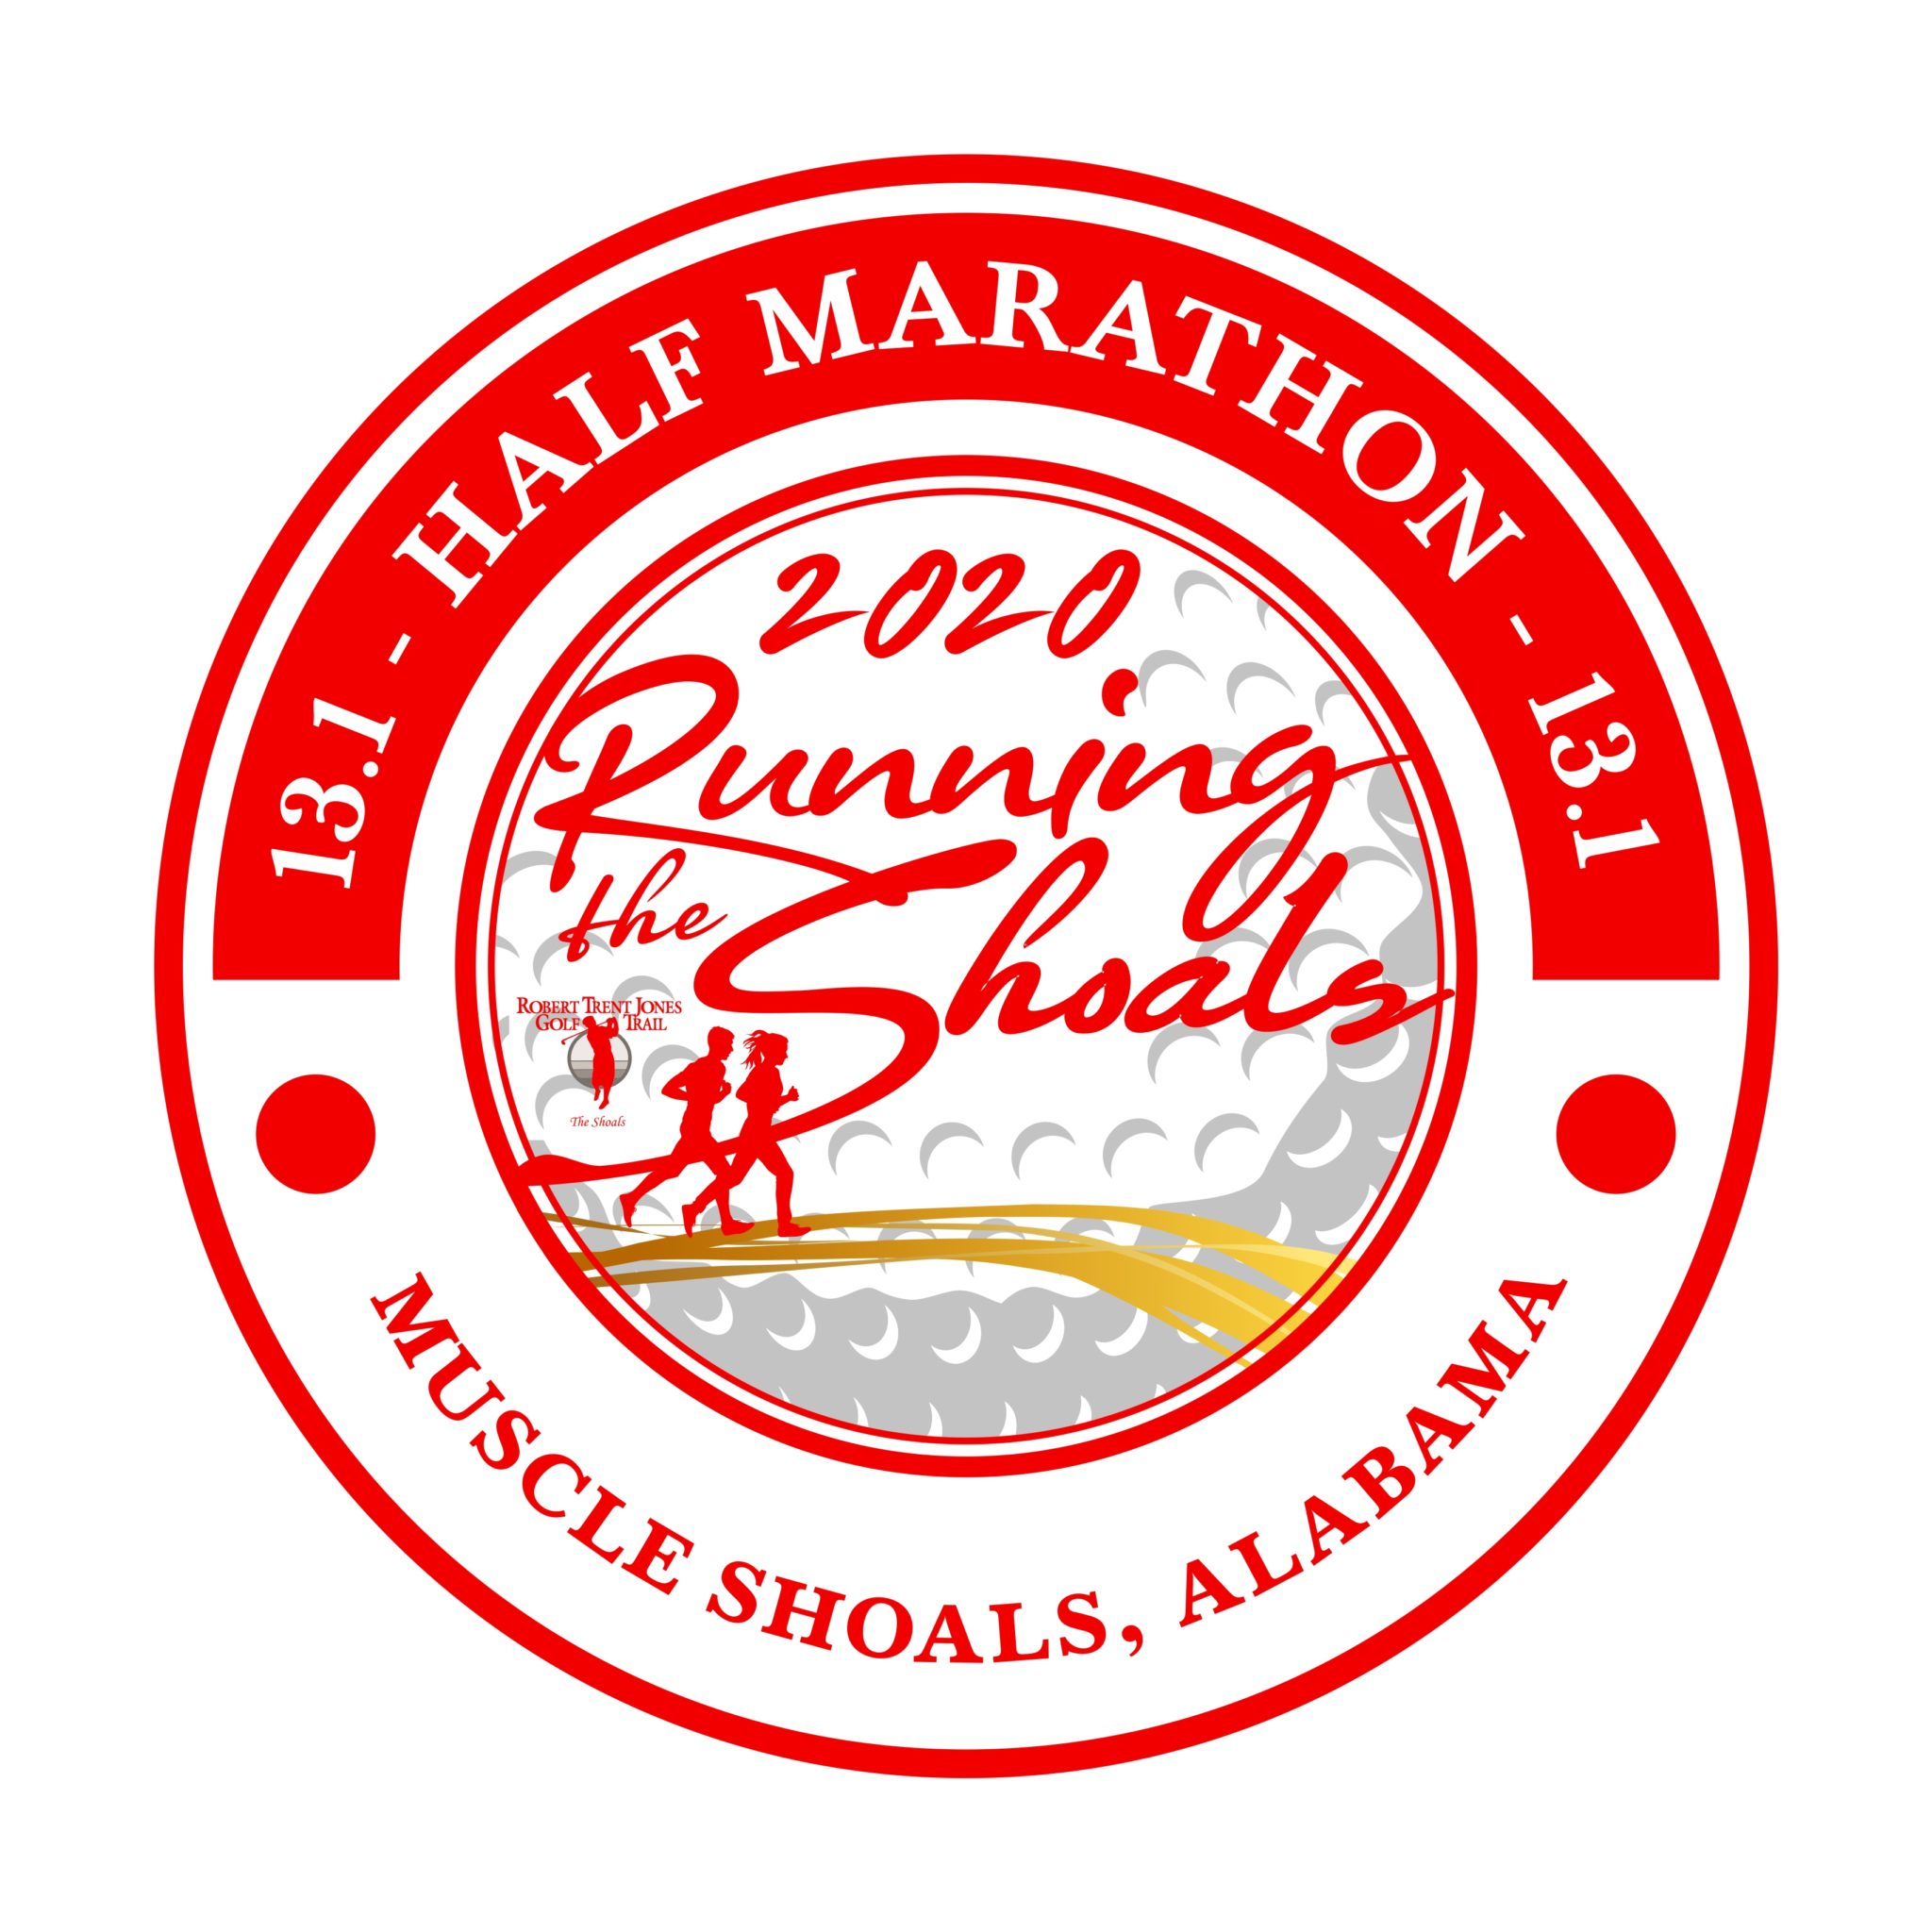 Running the Shoals Half Marathon logo on RaceRaves